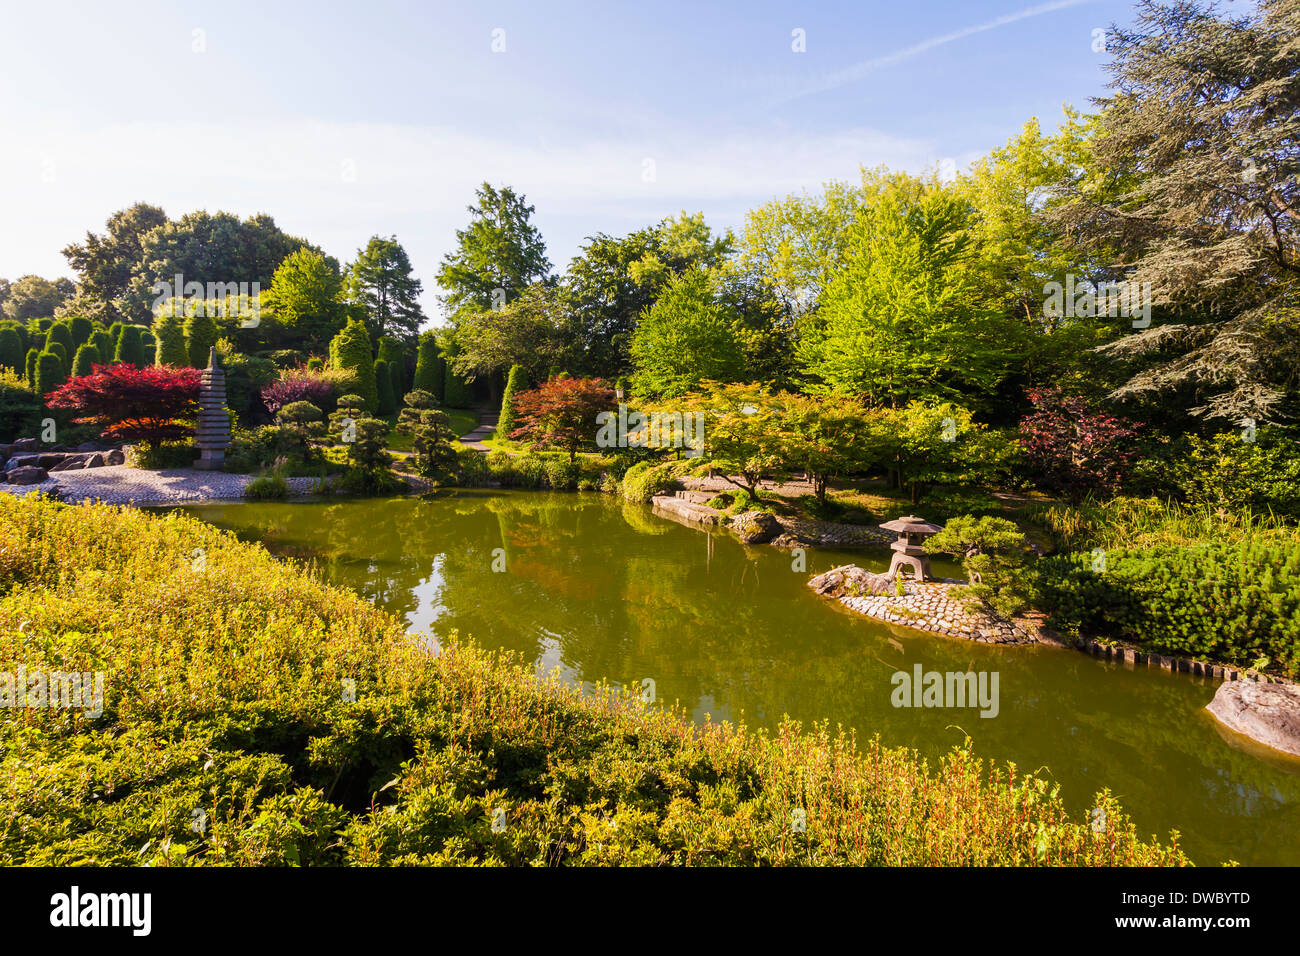 Germany, North Rhine-Westphalia, Bonn, view to Japanese garden Stock Photo